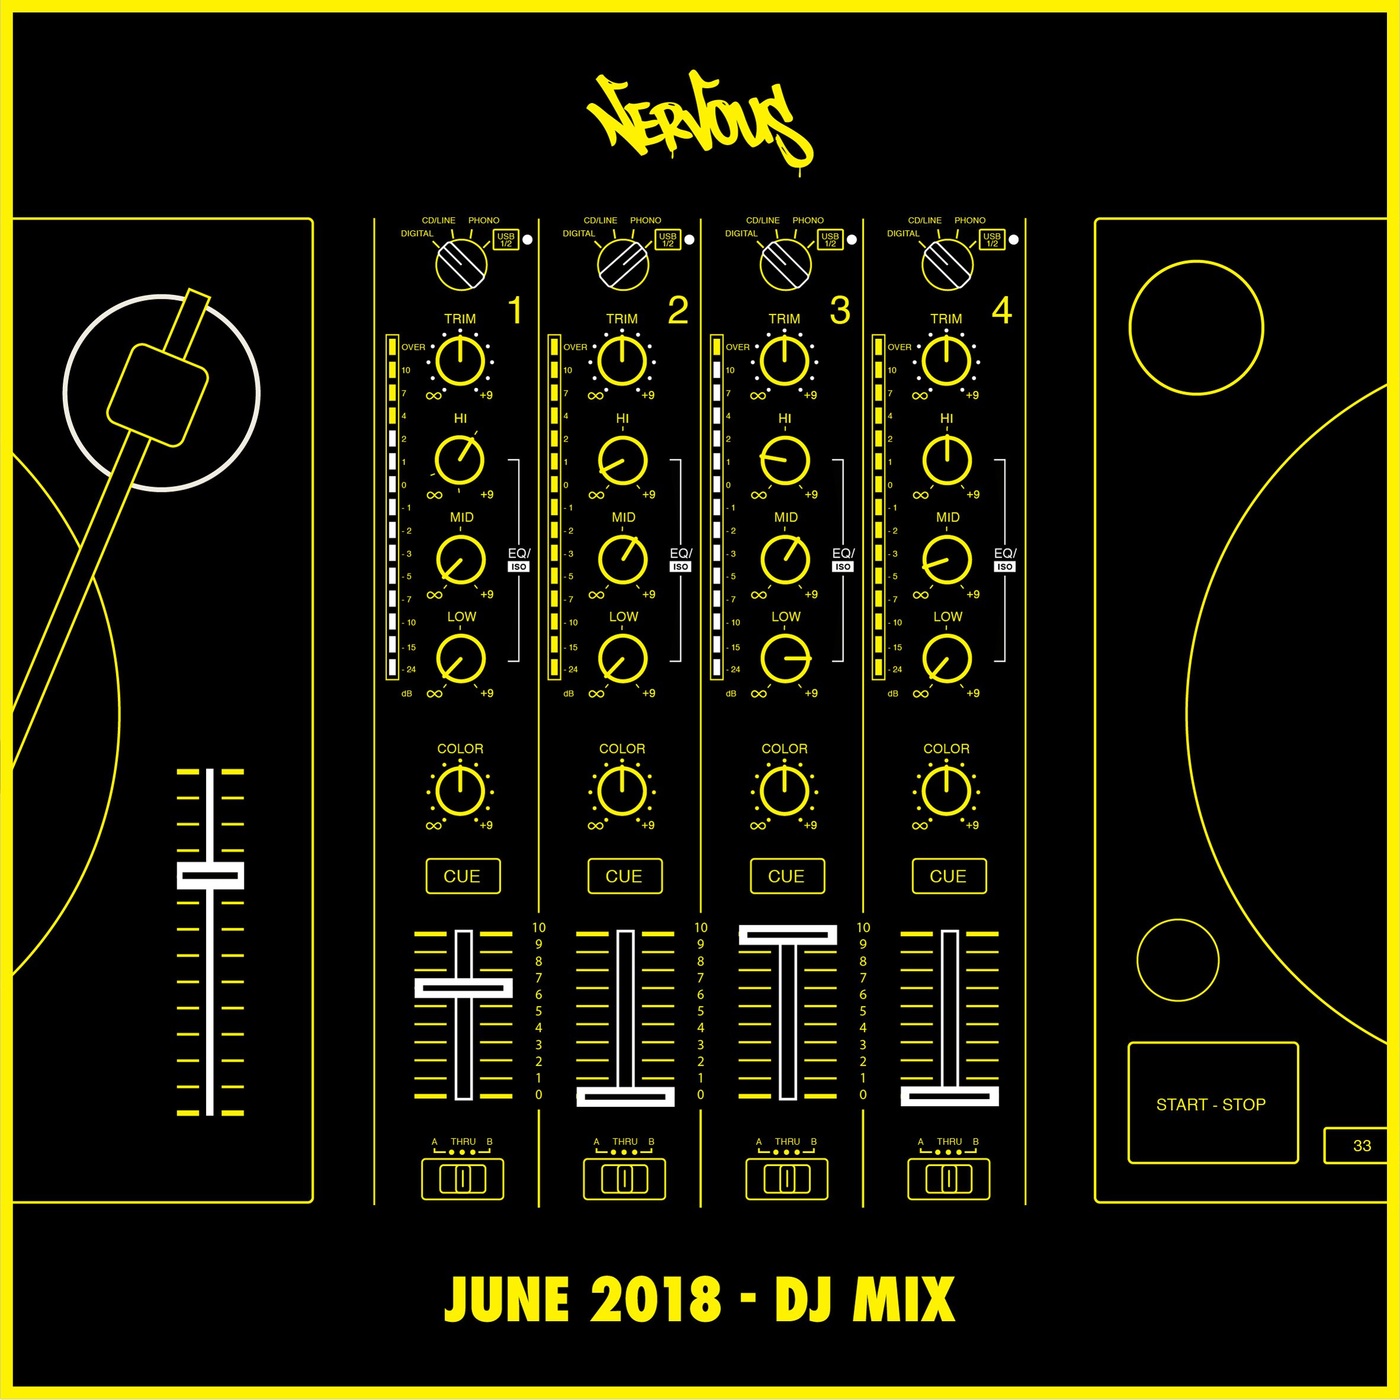 VA - Nervous June 2018: DJ Mix / Nervous Records